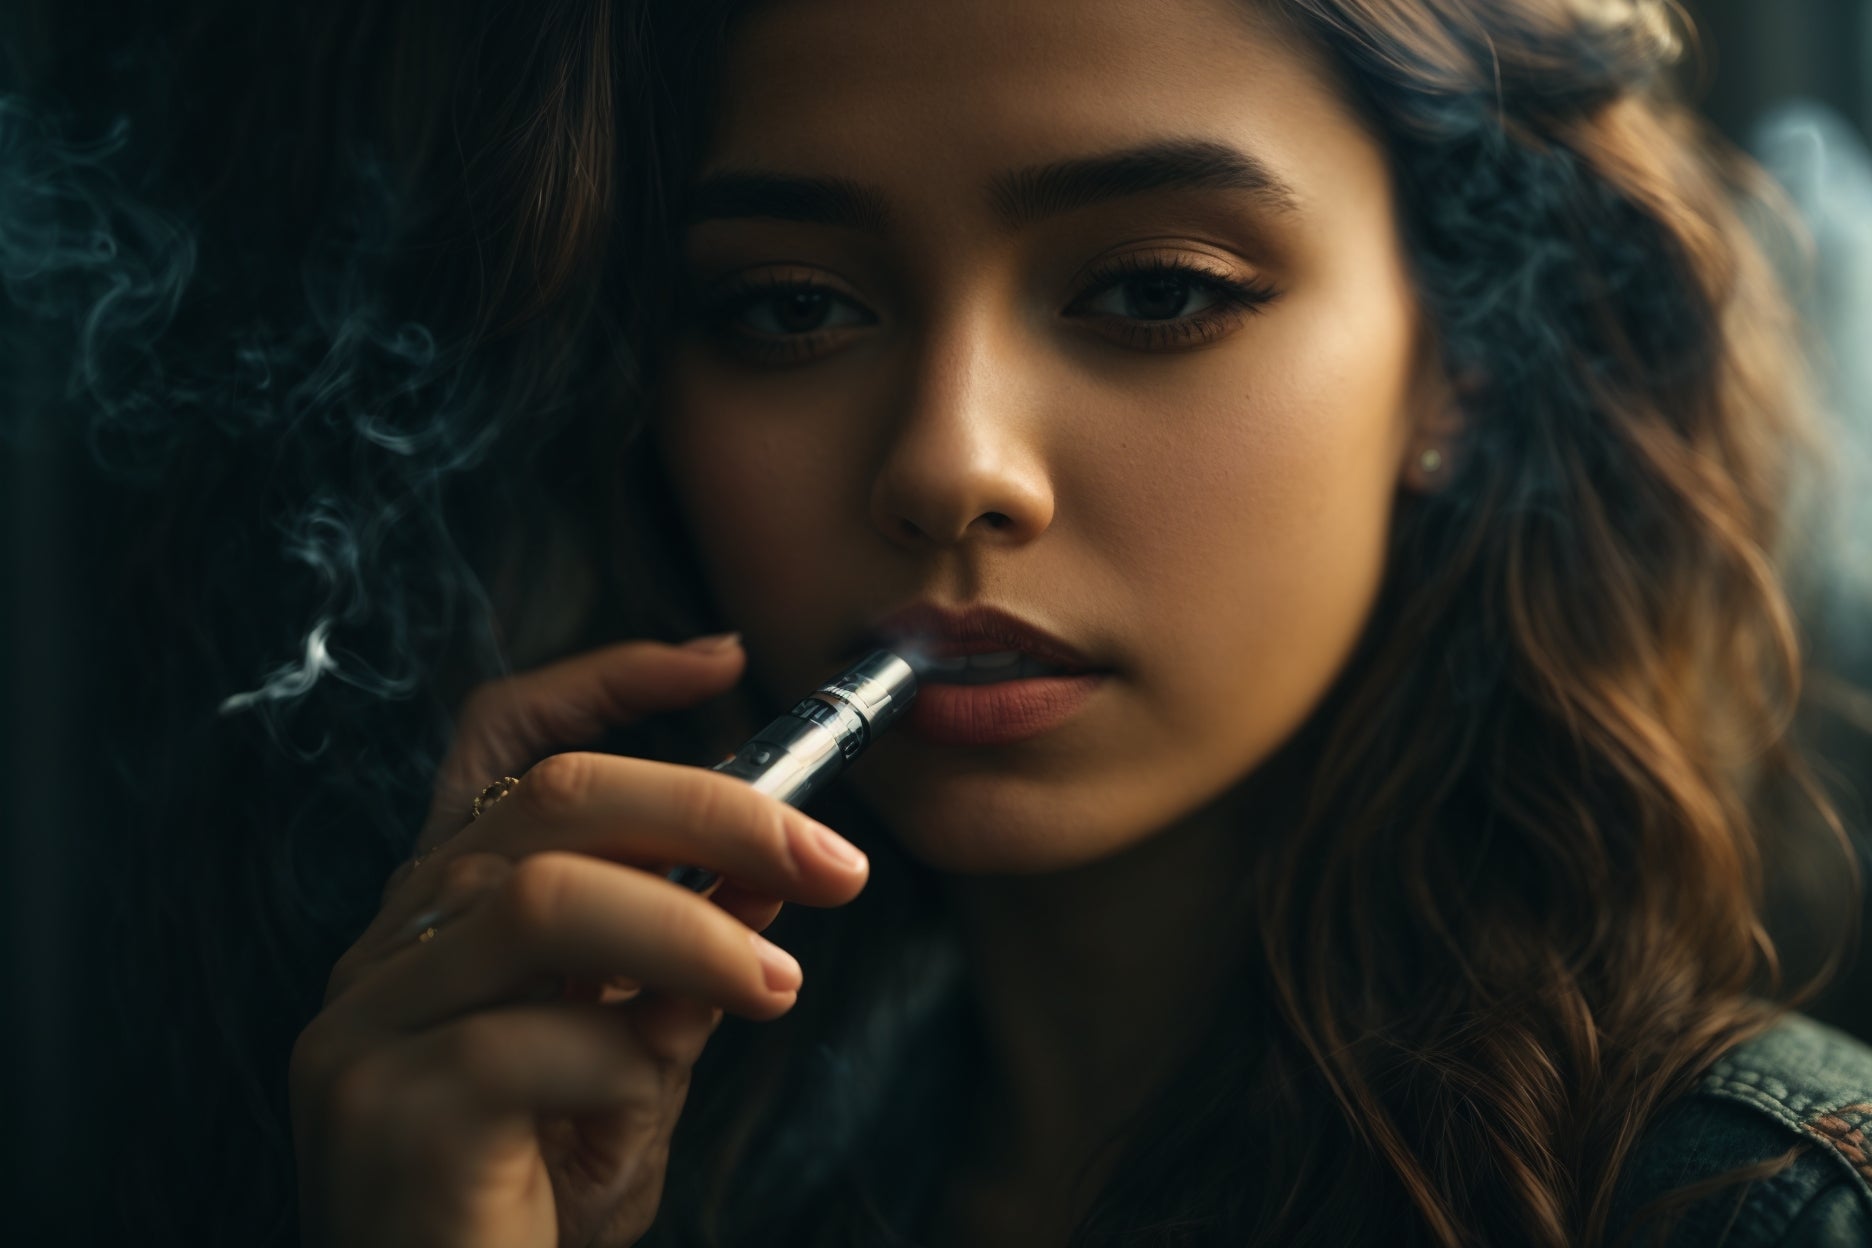 Disposable E-Cigarettes Explained